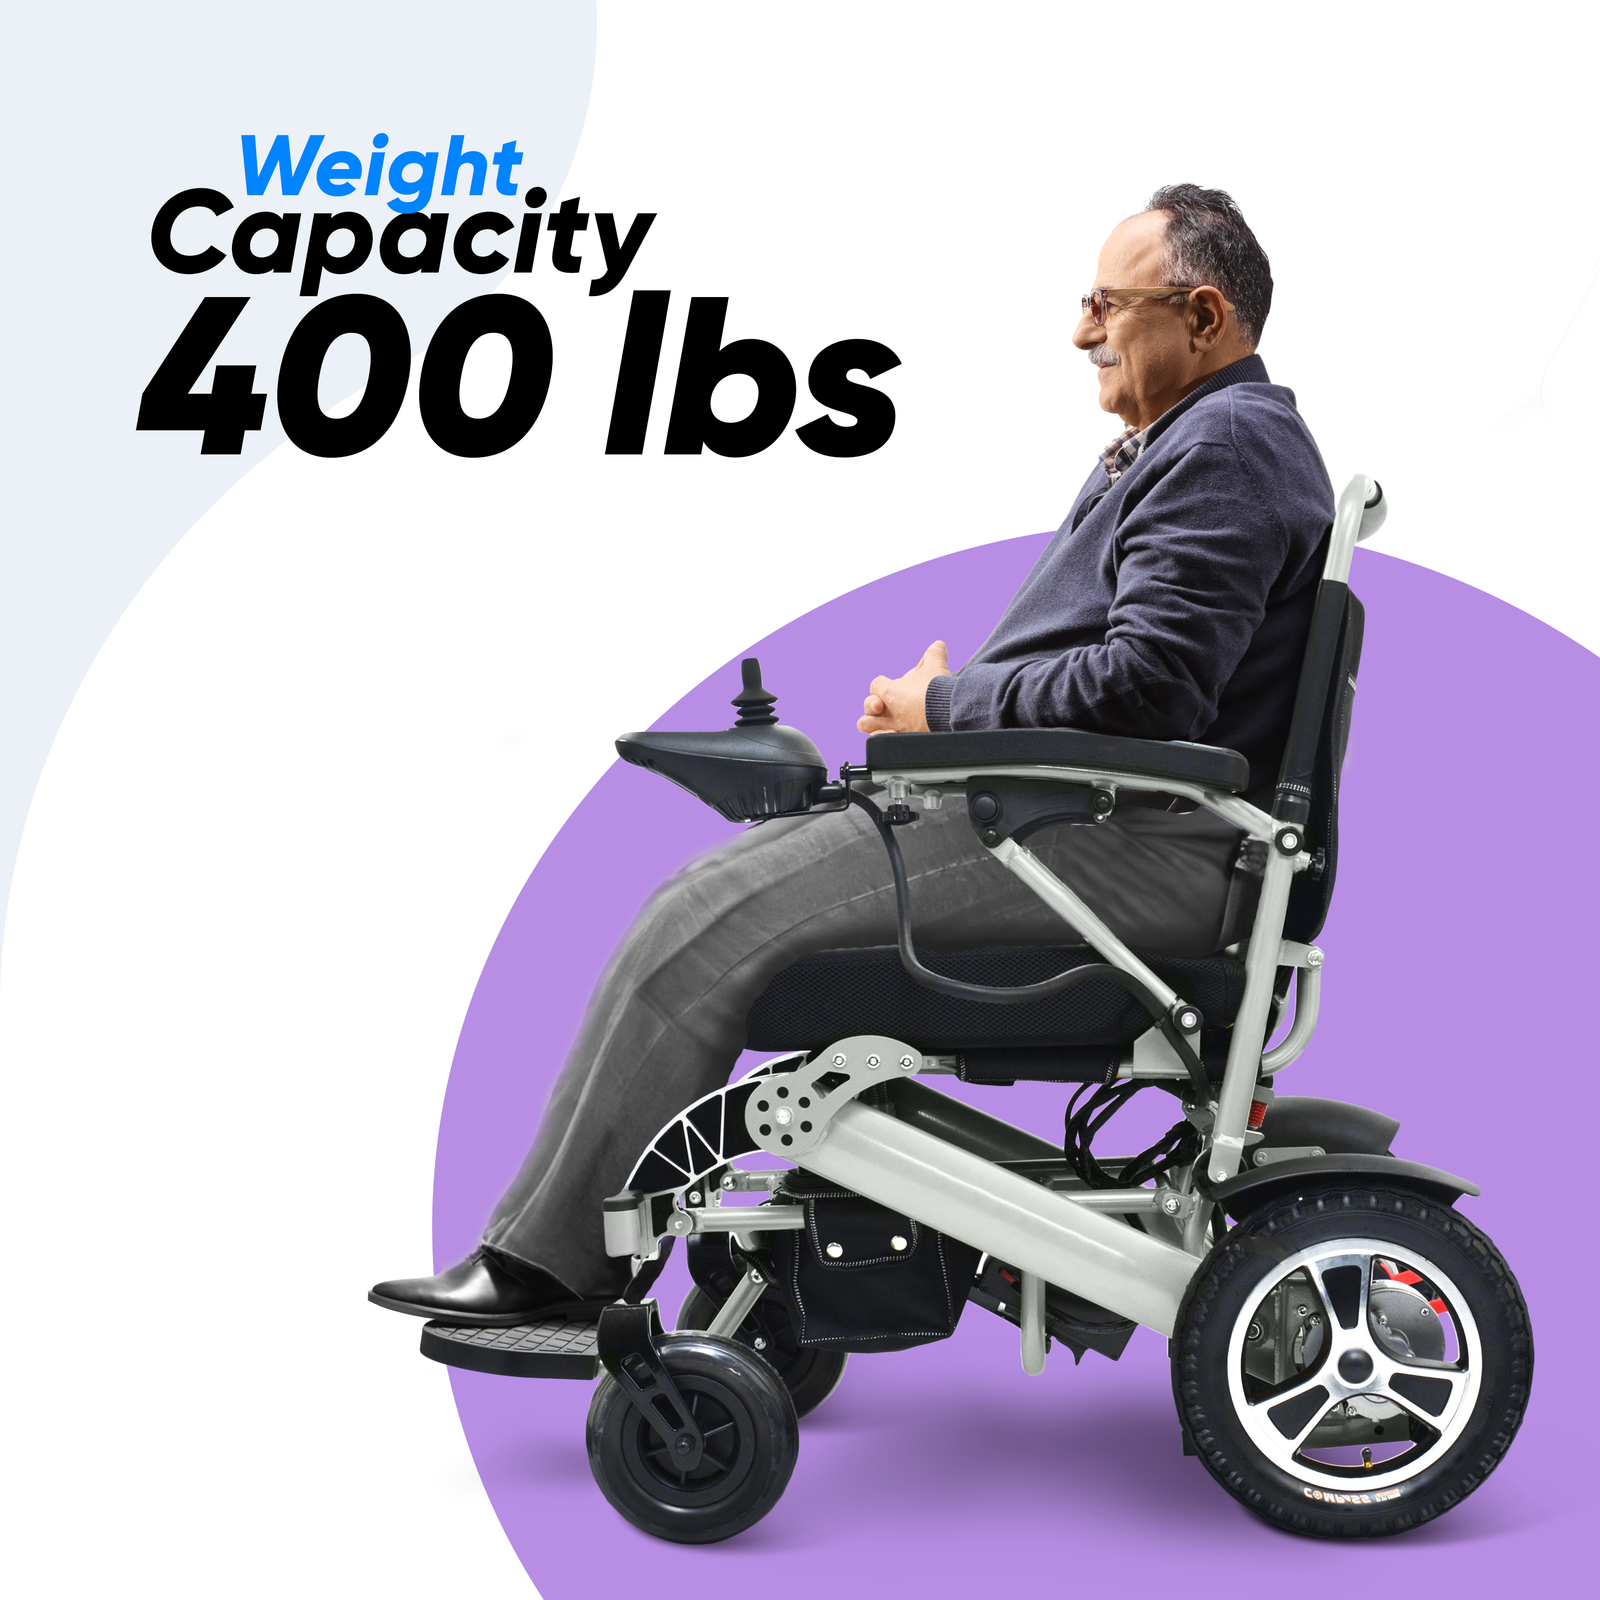 Ephesus E5 High Weight Capacity 400 lbs Electric Wheelchair 